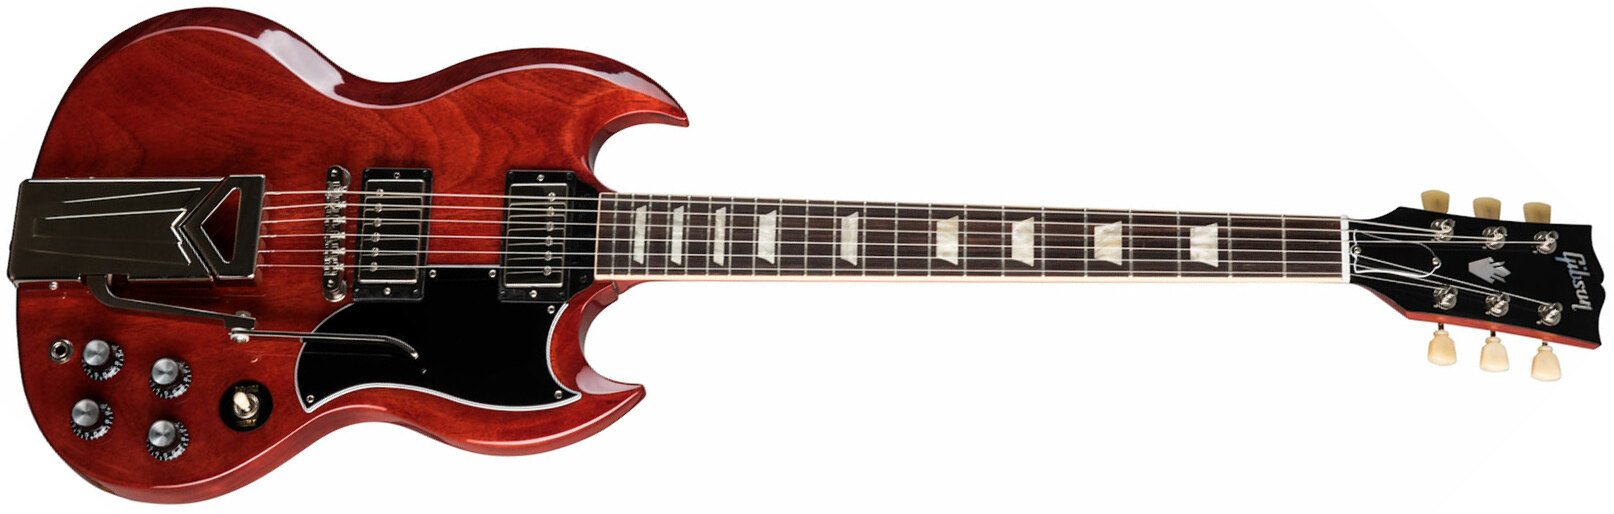 Gibson Sg Standard '61 Sideways Vibrola Original 2h Ht Rw - Vintage Cherry - Retro rock electric guitar - Main picture